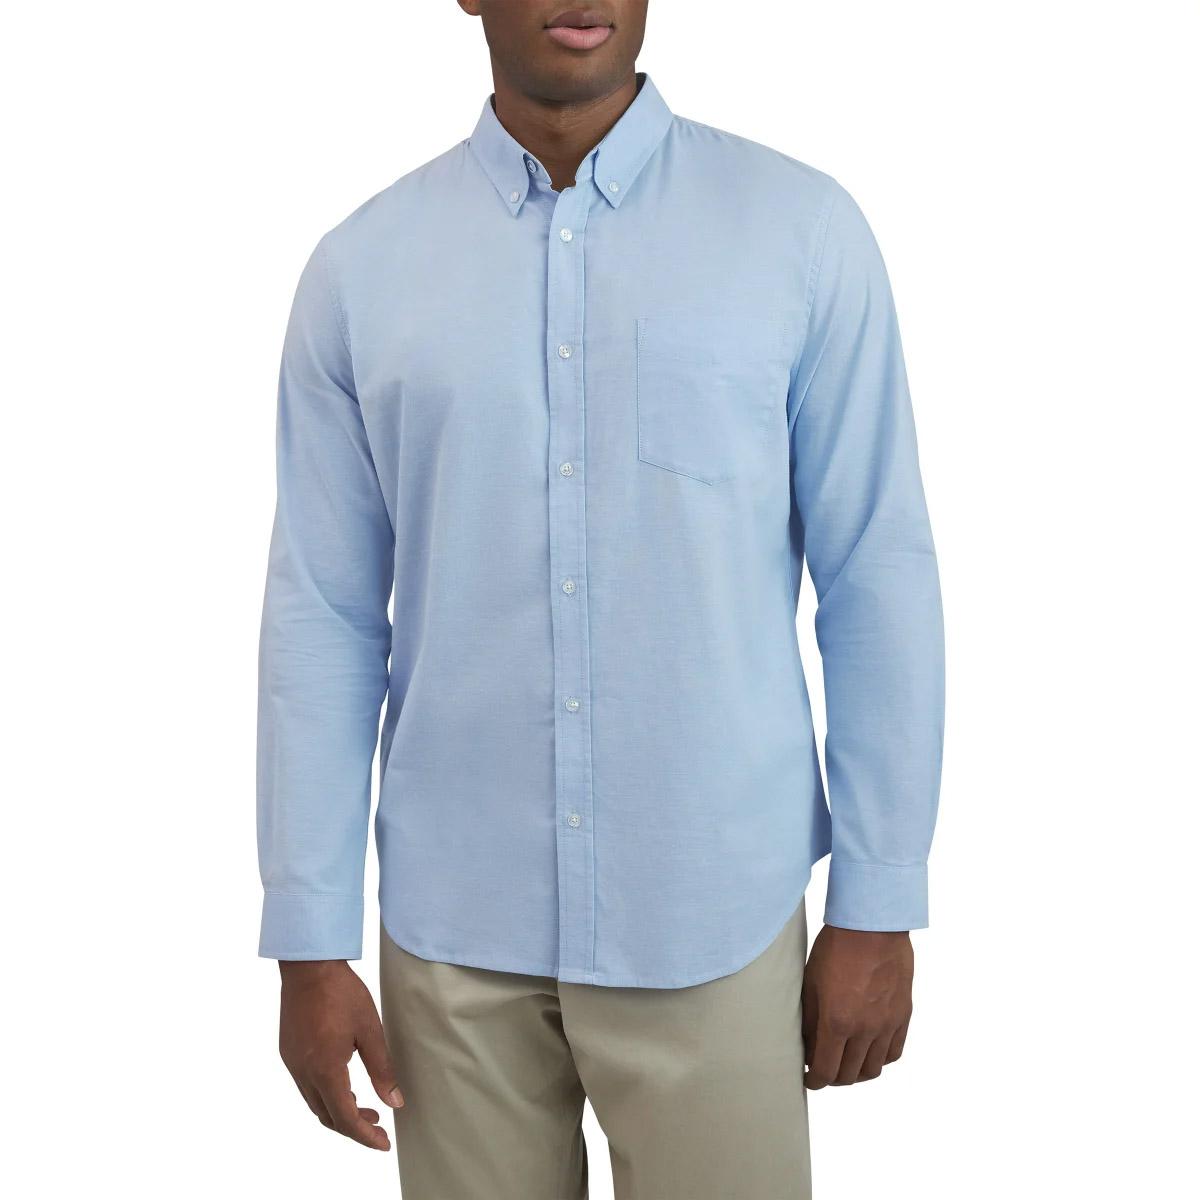 Ben Sherman Mens Oxford Long Sleeve Button Up Shirt for $18.99 Shipped